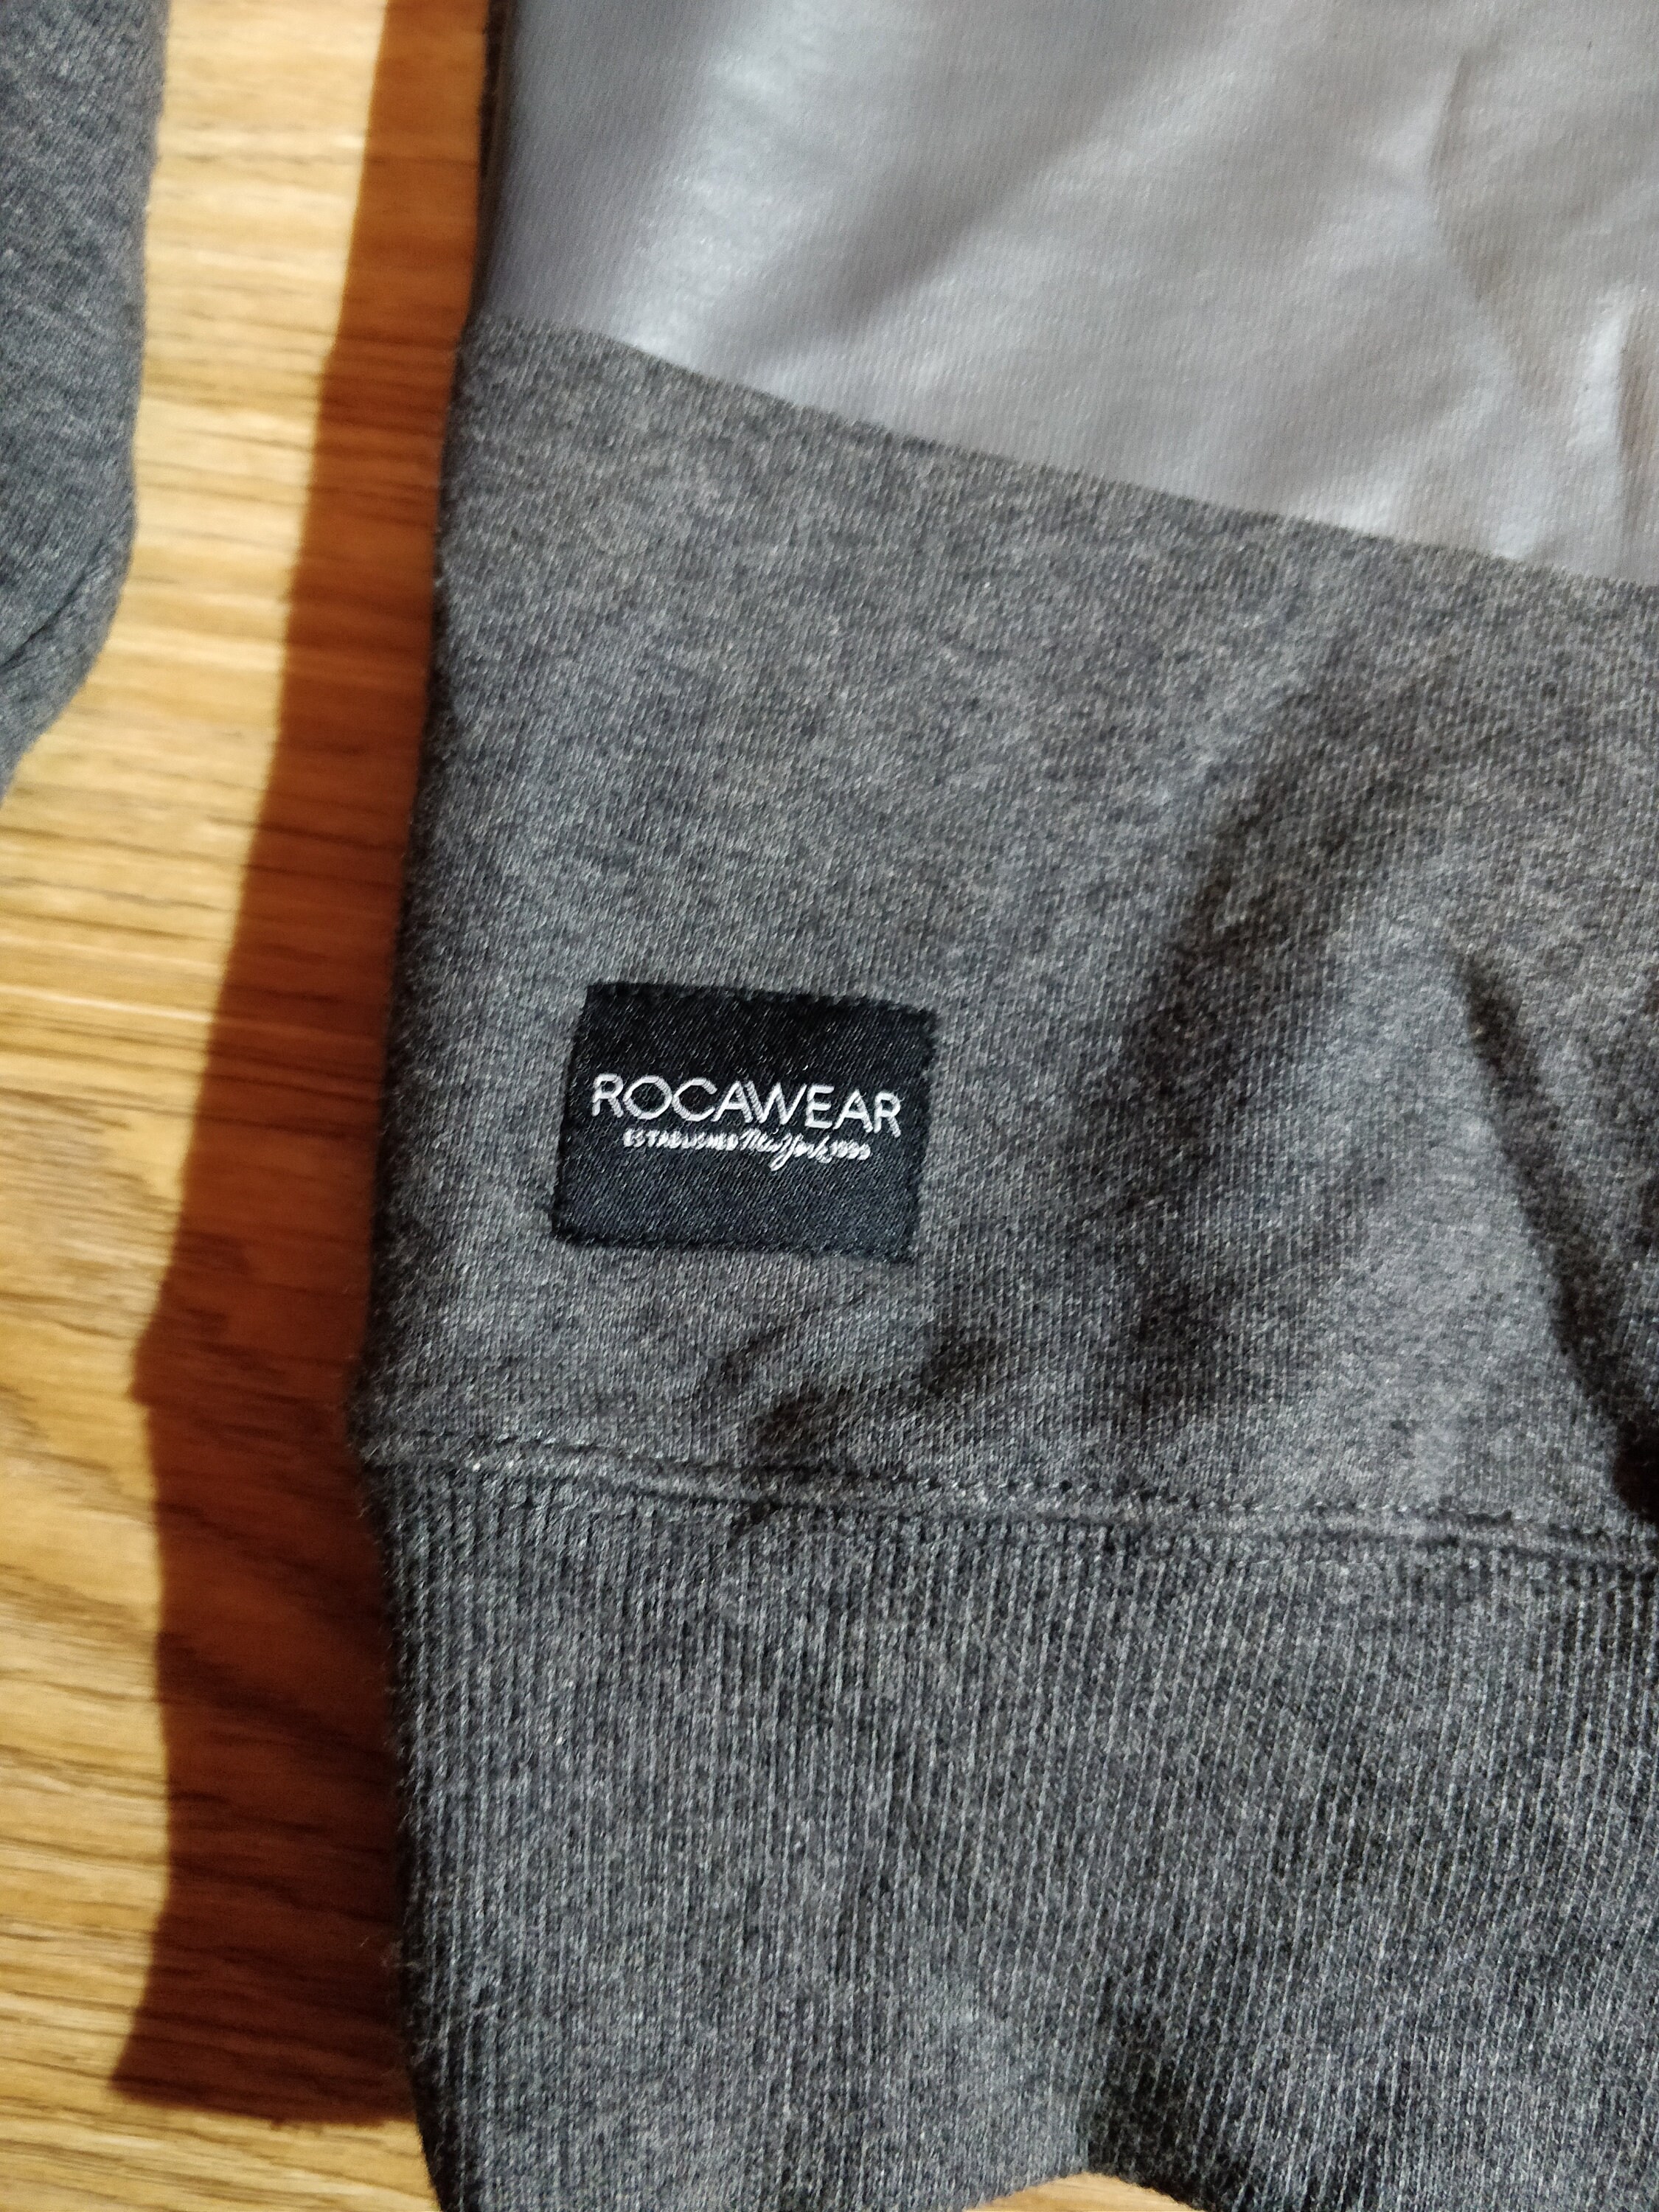 Rocawear Carter 4 Mens Sweatshirt Jacket Hip Hop Hype Jay-z - Etsy